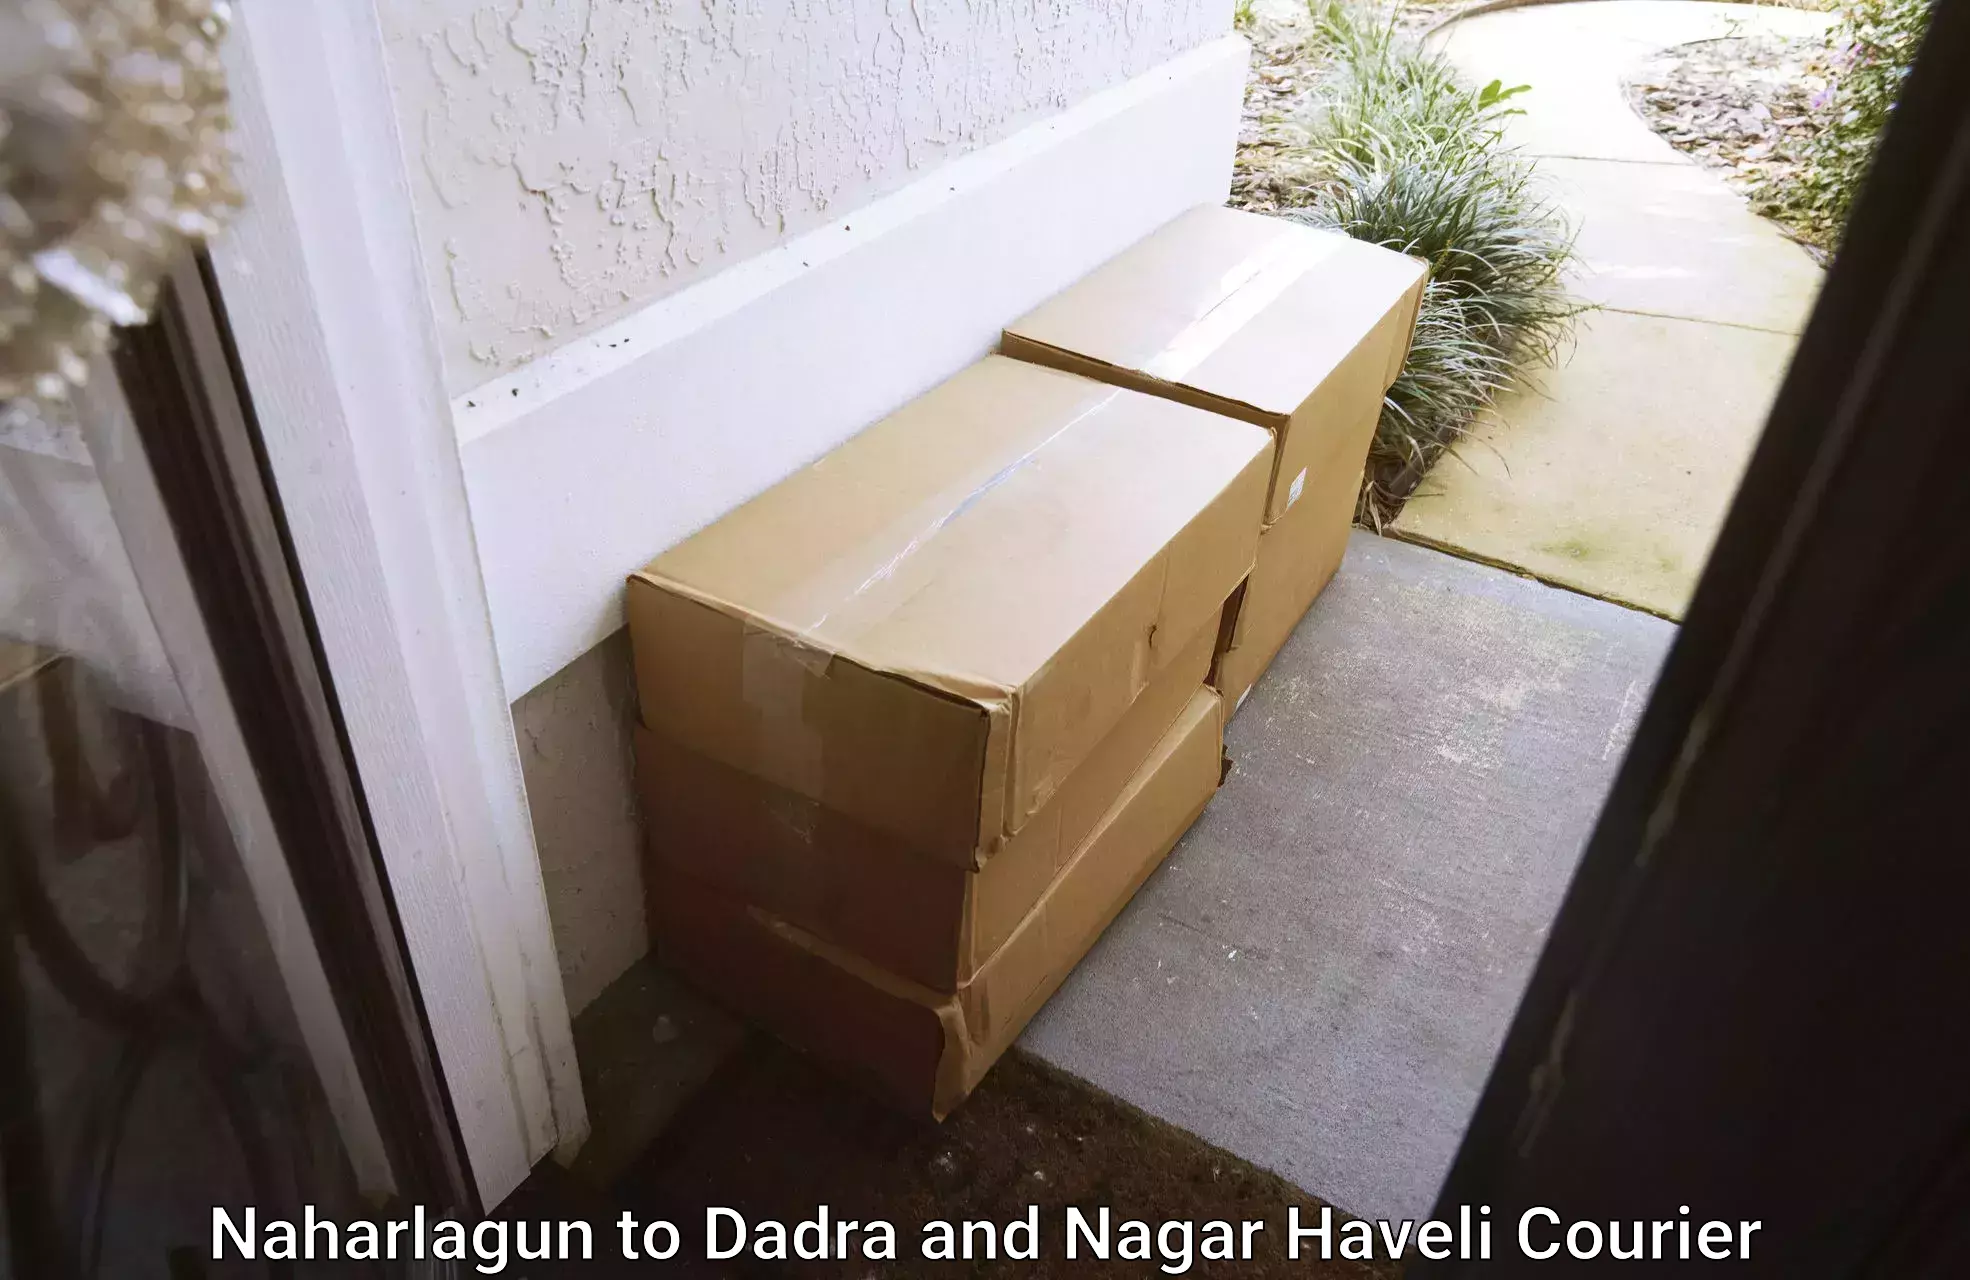 Professional courier handling Naharlagun to Silvassa